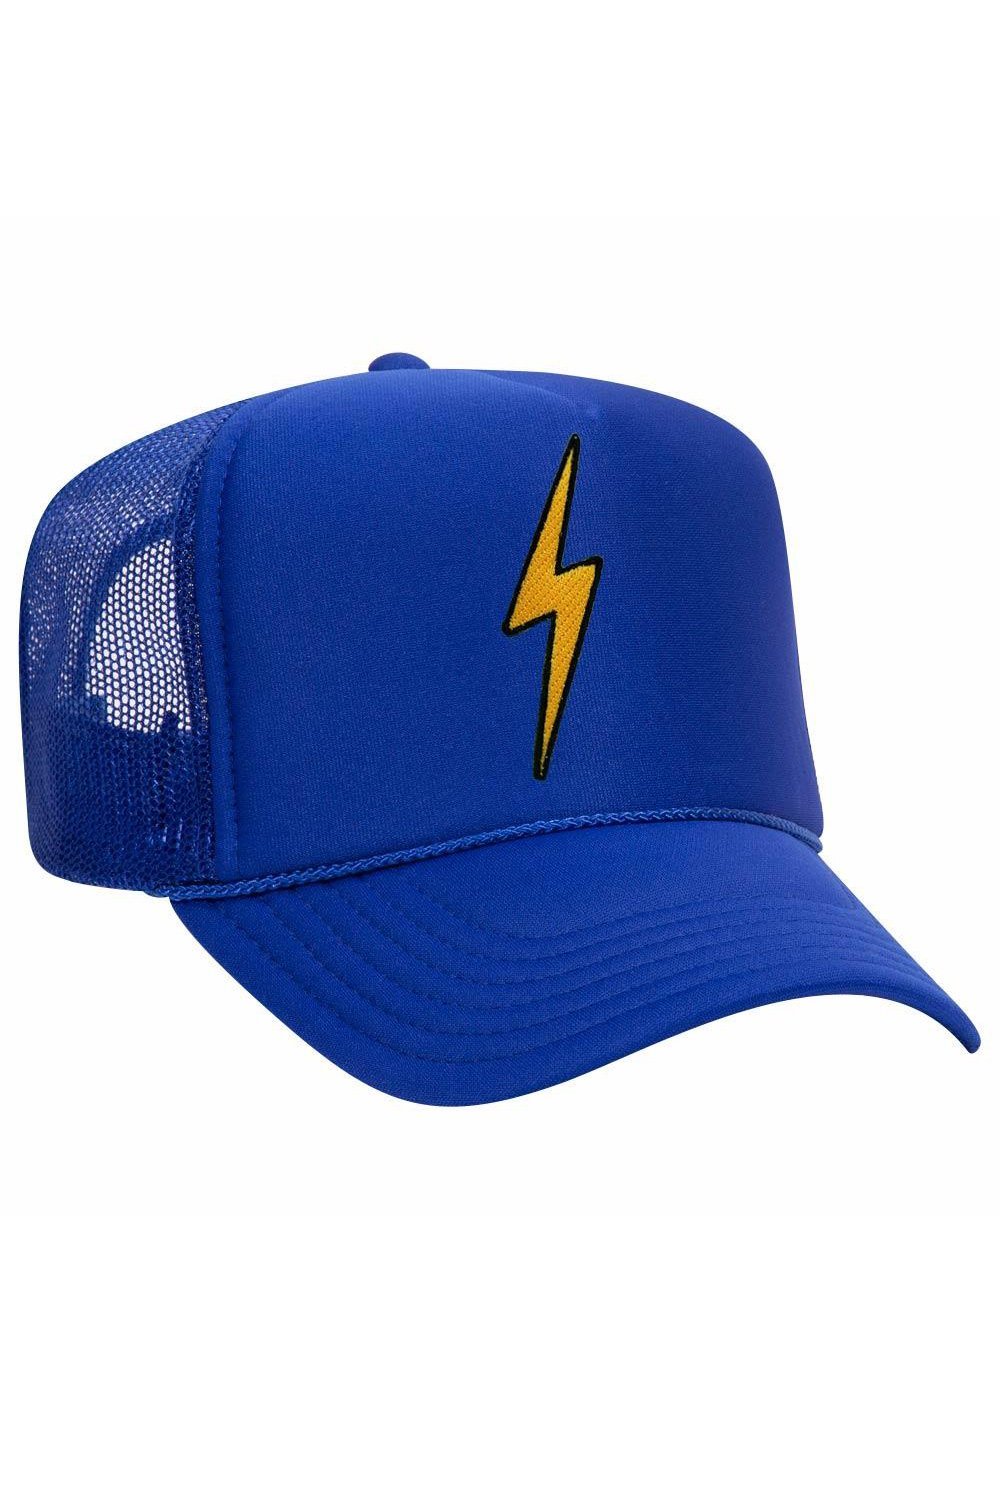 Vintage Bolt Trucker Hat Os / Neon Blue